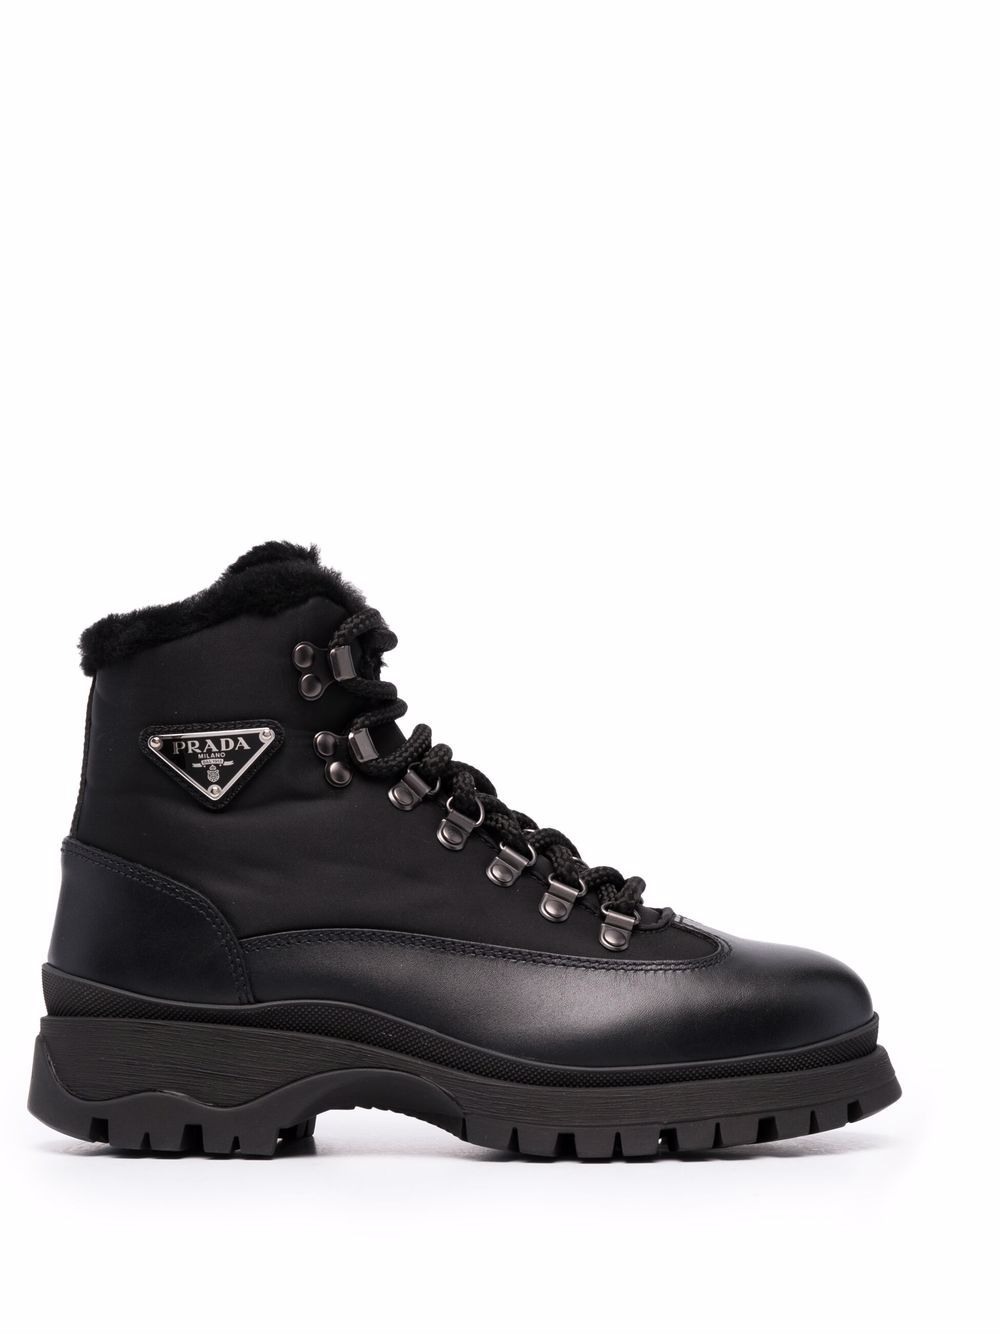 Brixxen Boots дамски обувки Prada 889505649_39